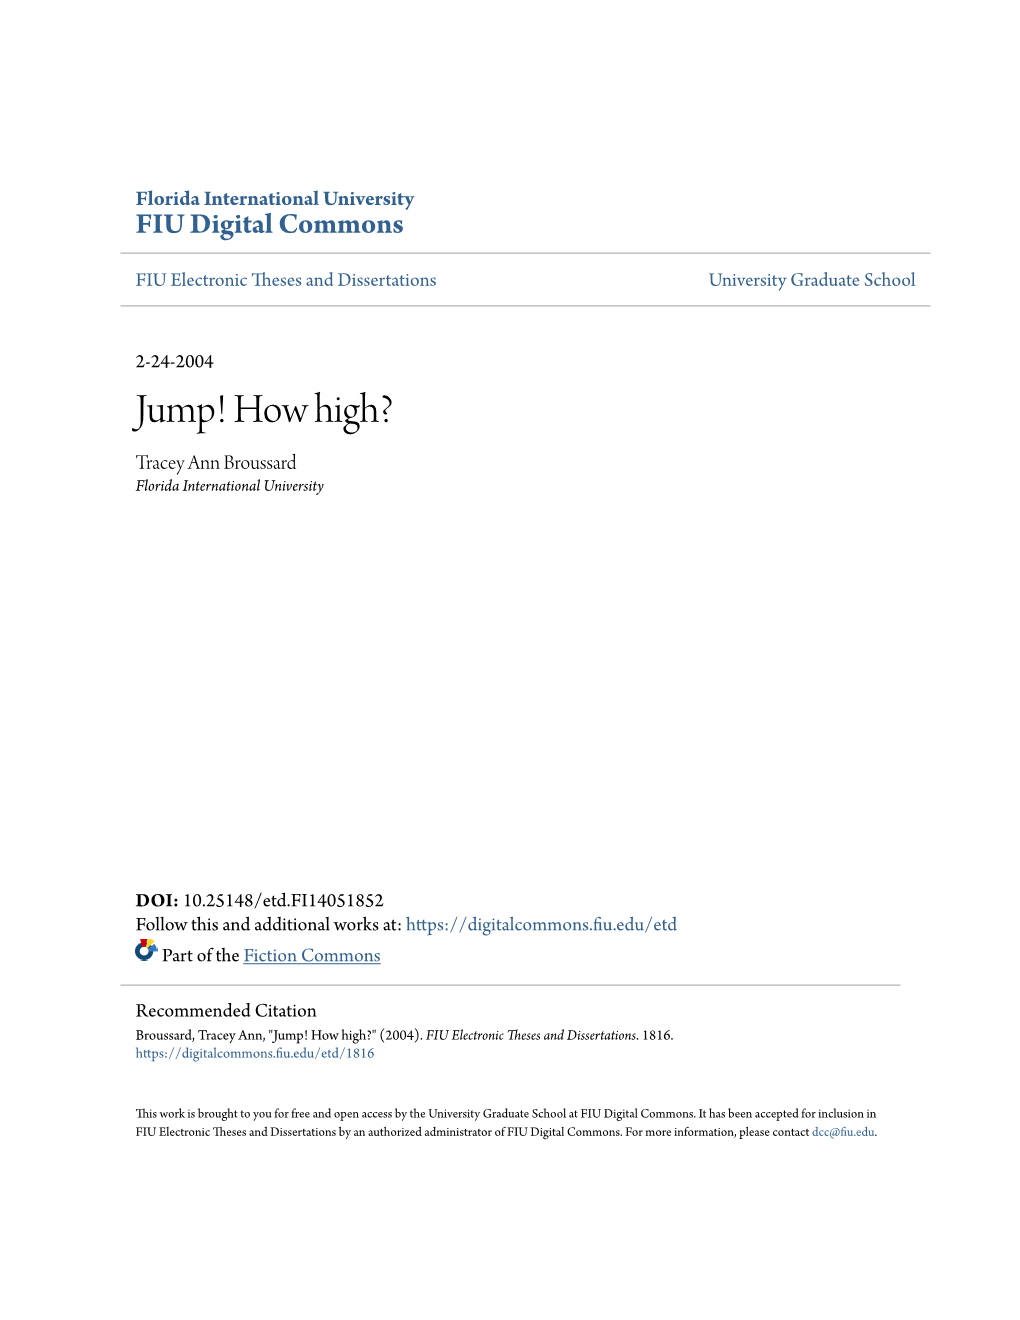 How High? Tracey Ann Broussard Florida International University